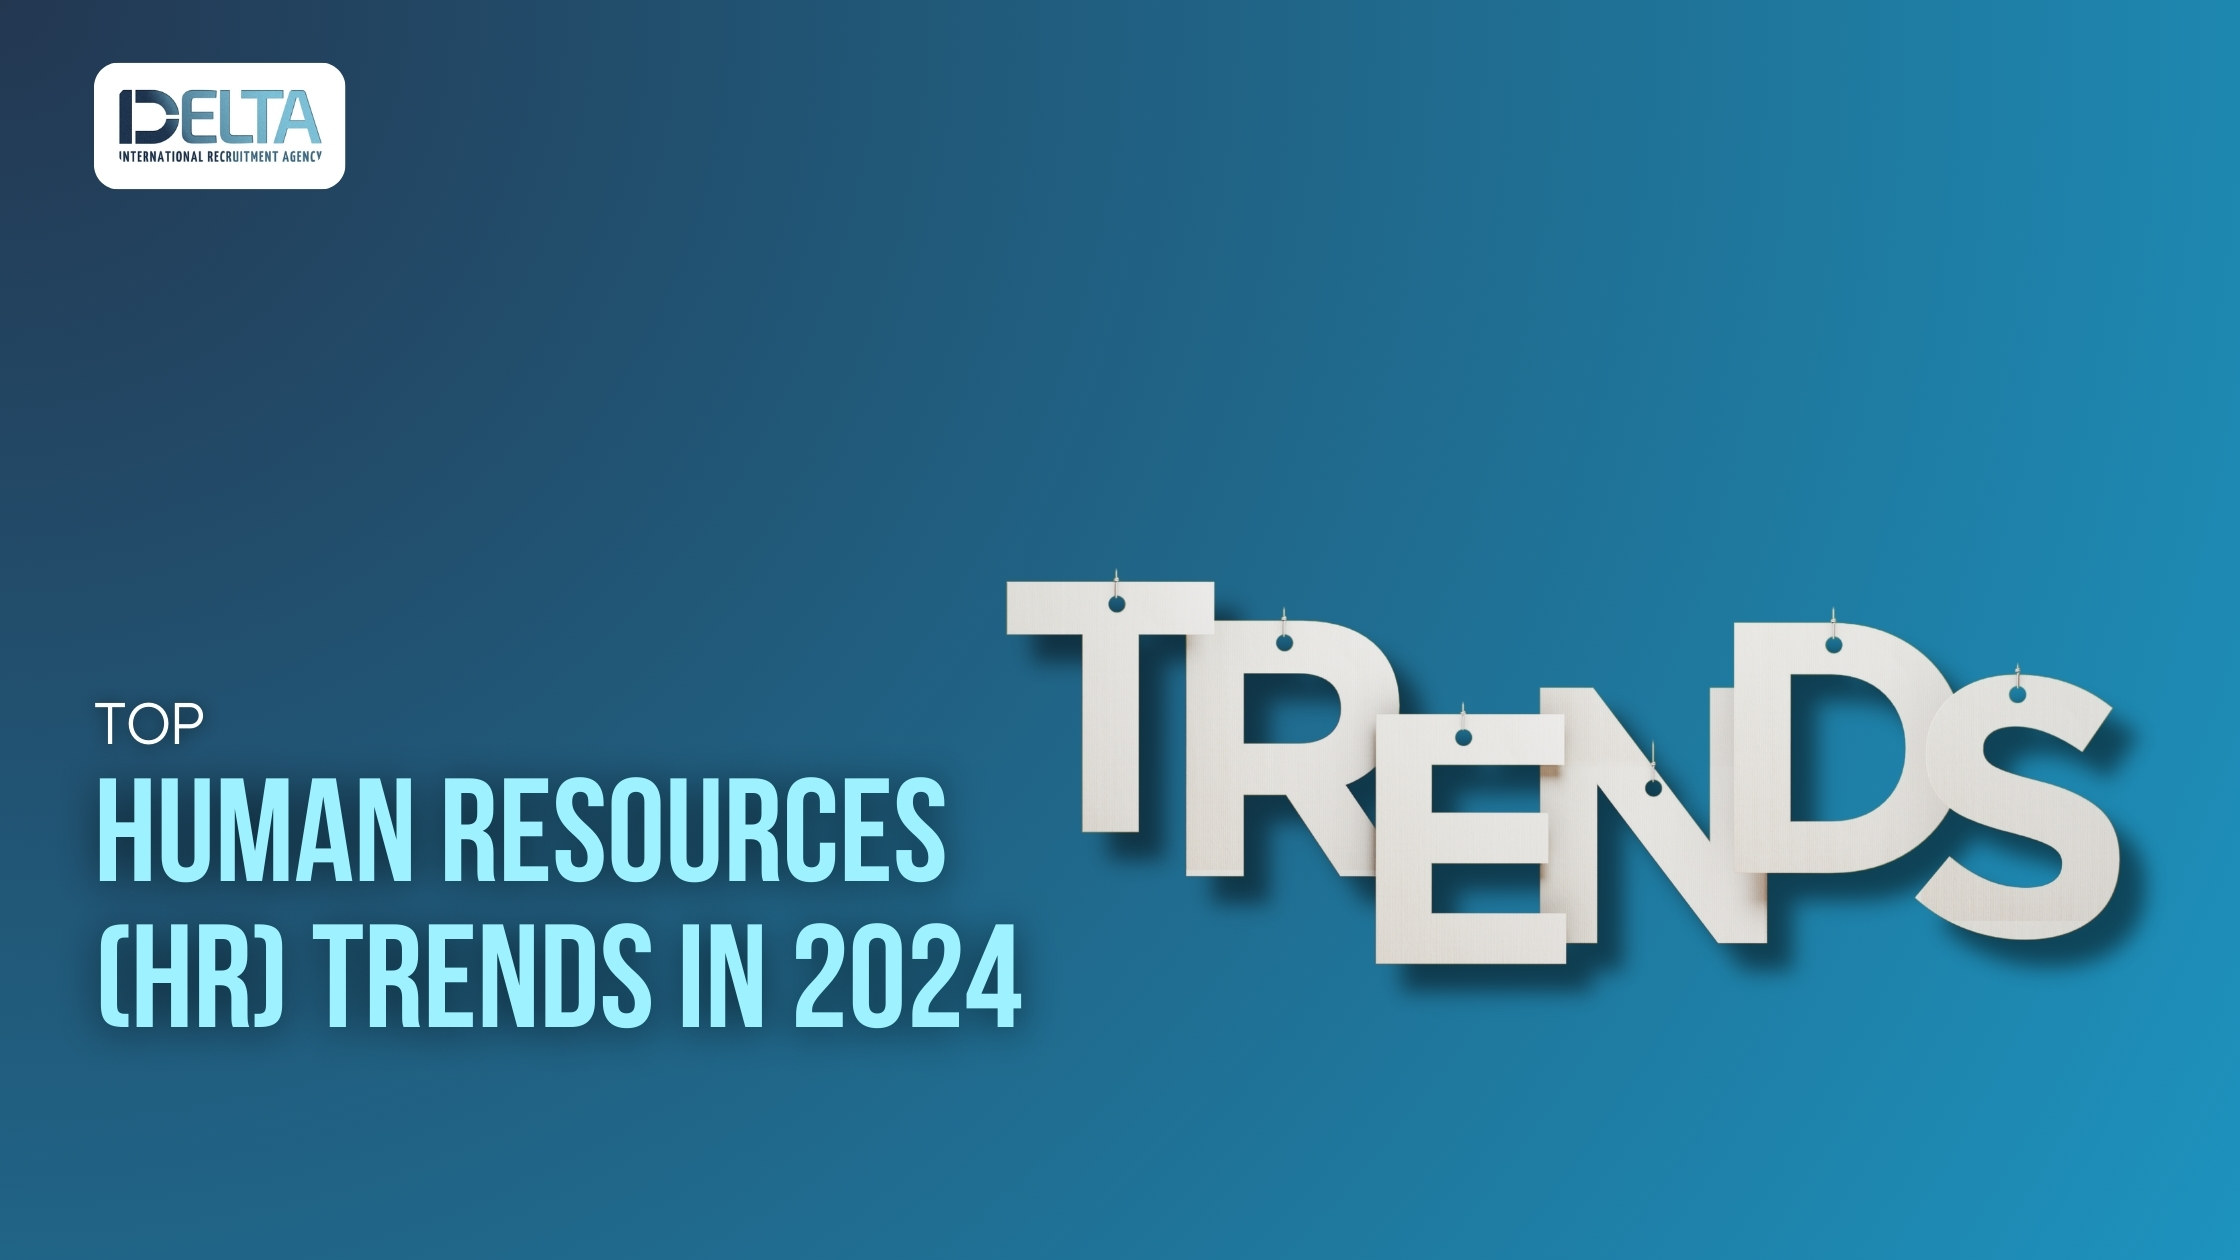 Top Human Resources (HR) Trends in 2024